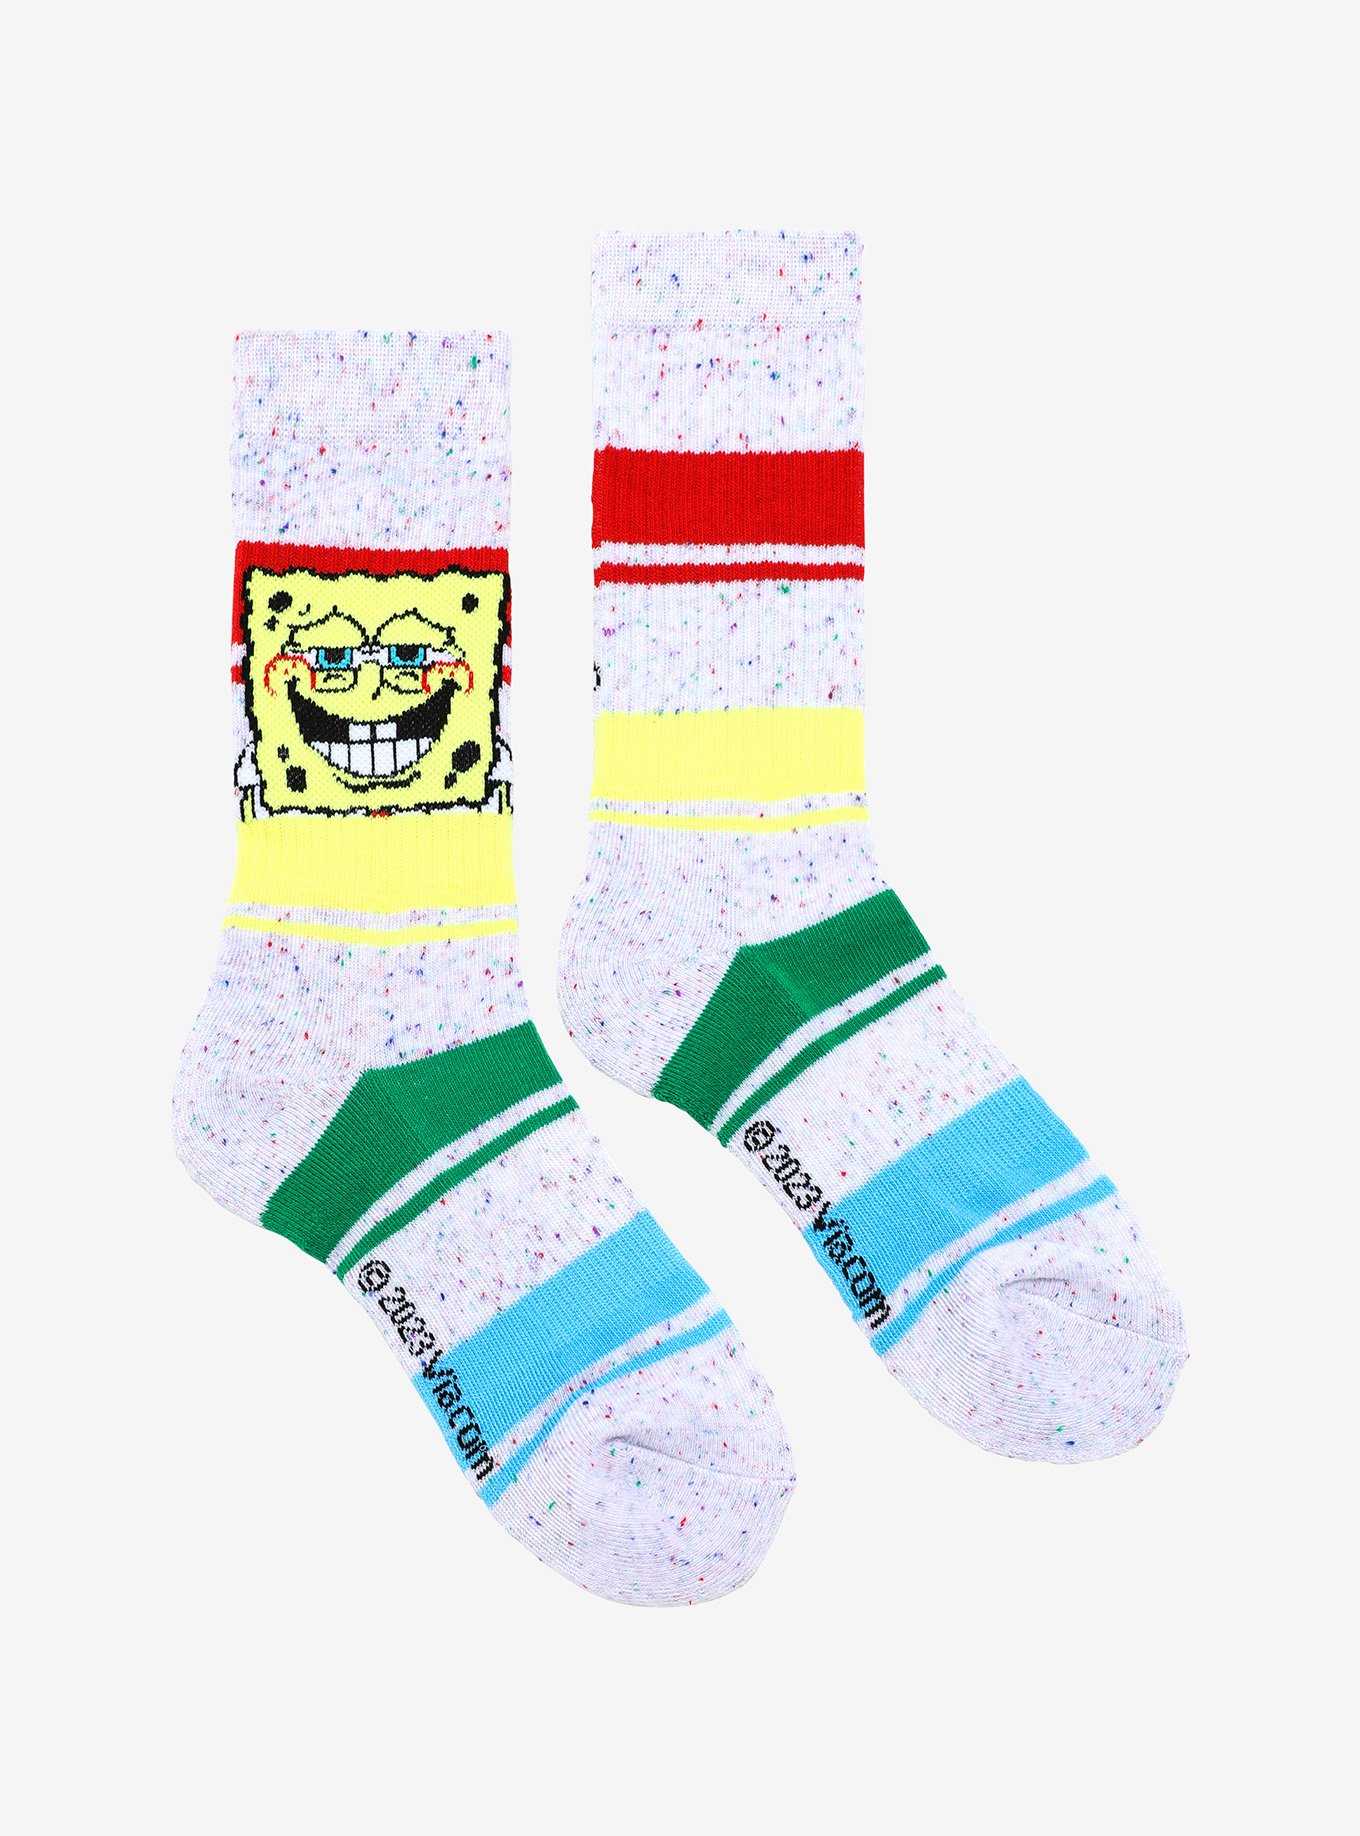 SpongeBob SquarePants Smile Speckled Crew Socks, , hi-res